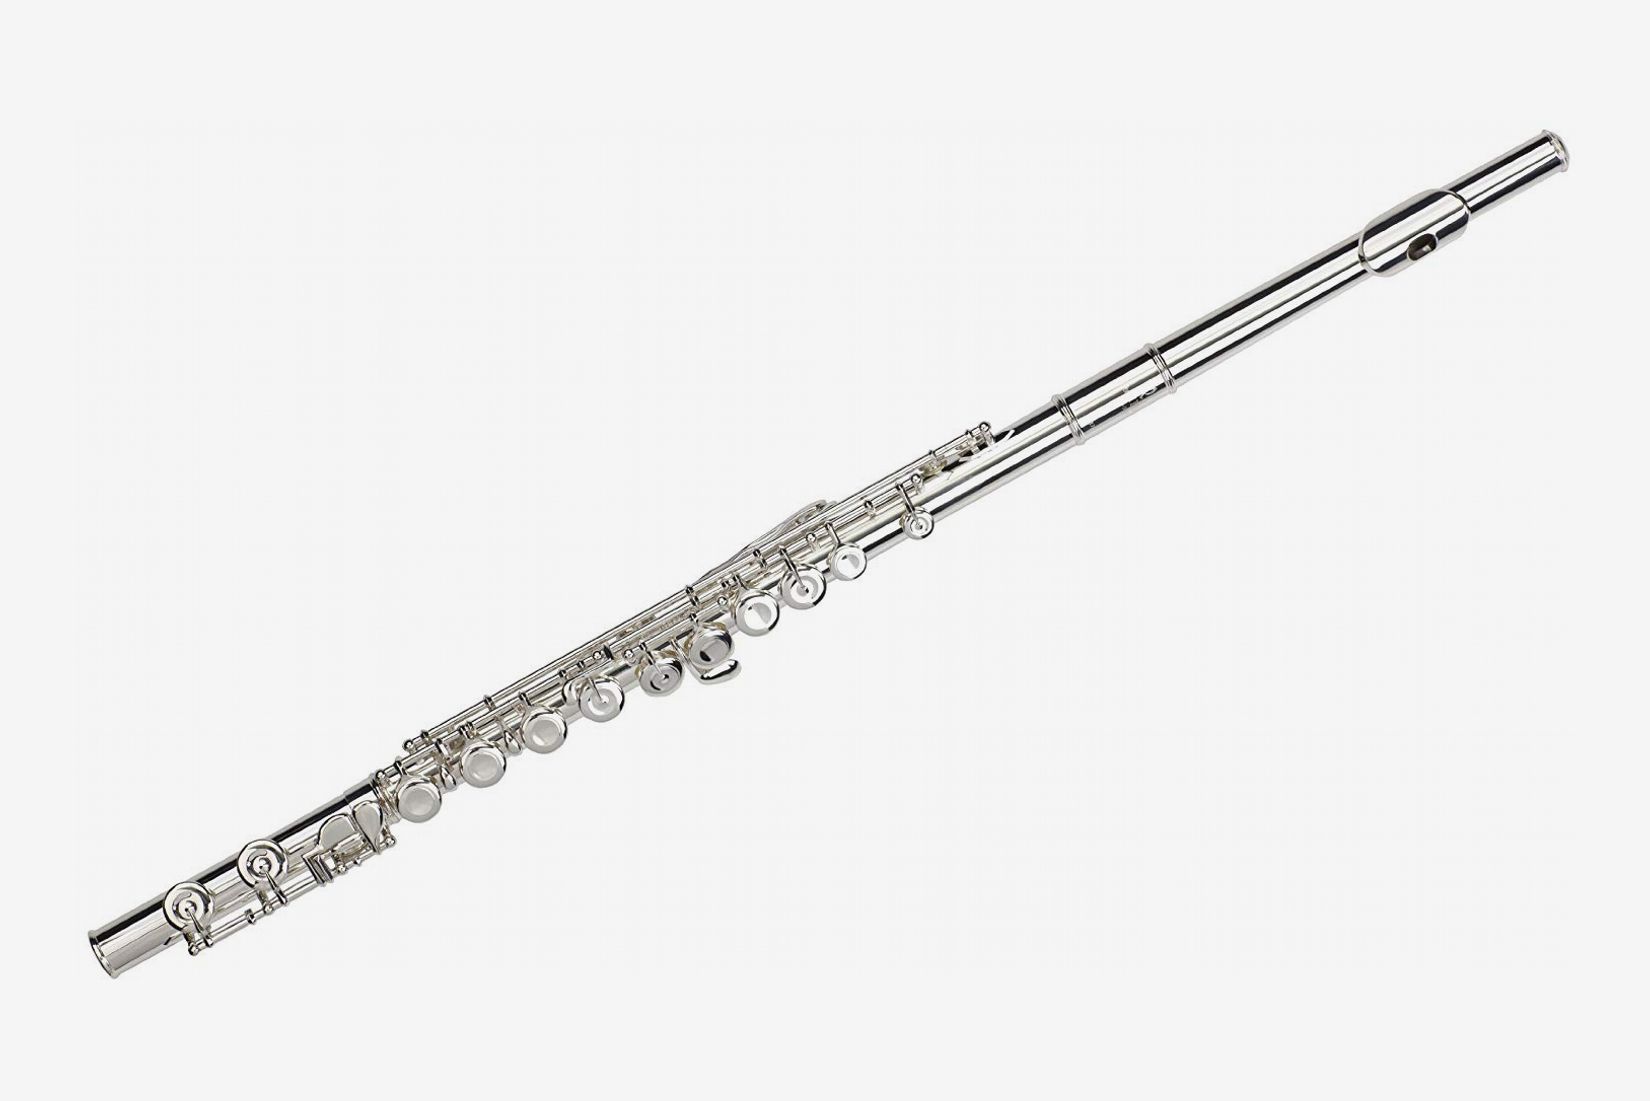 altus flute repair shop taipei taiwan